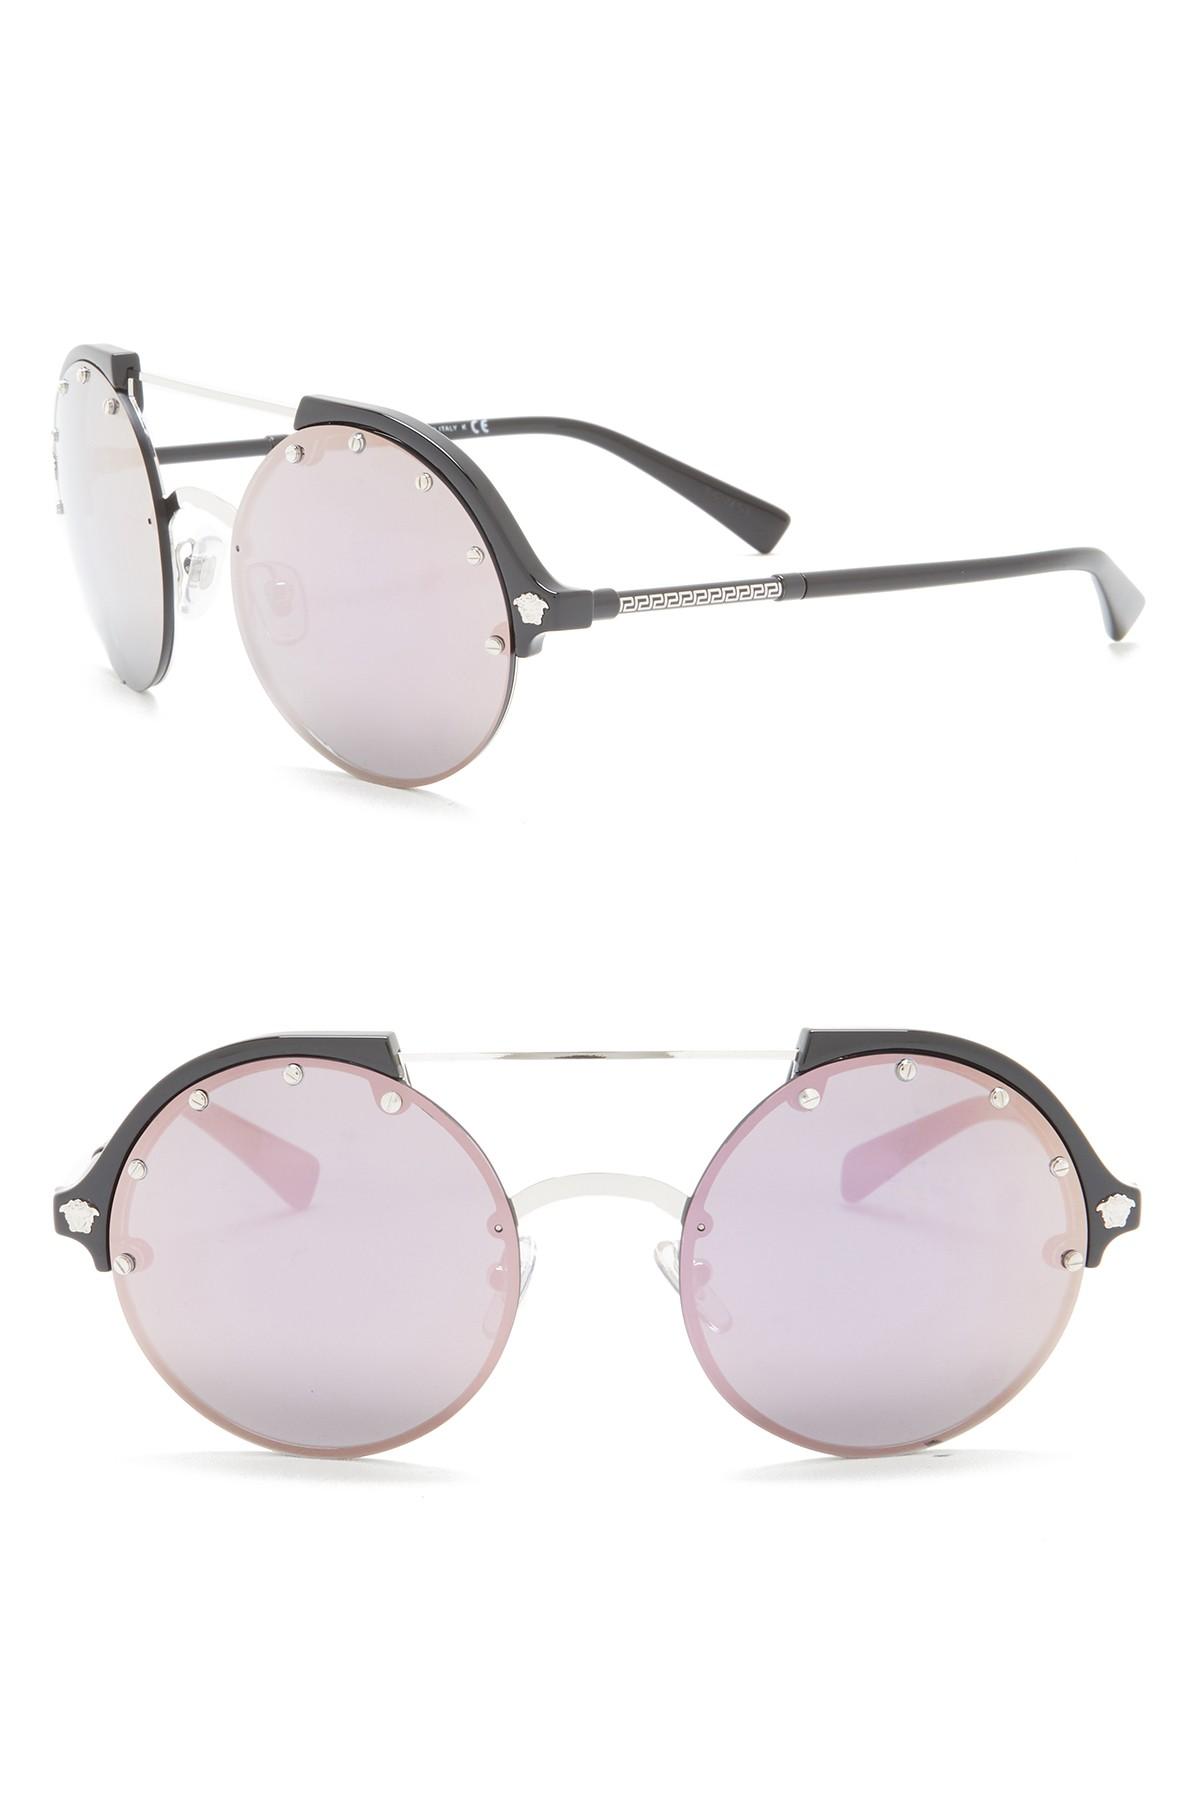 Versace Round 53mm Sunglasses - Lyst